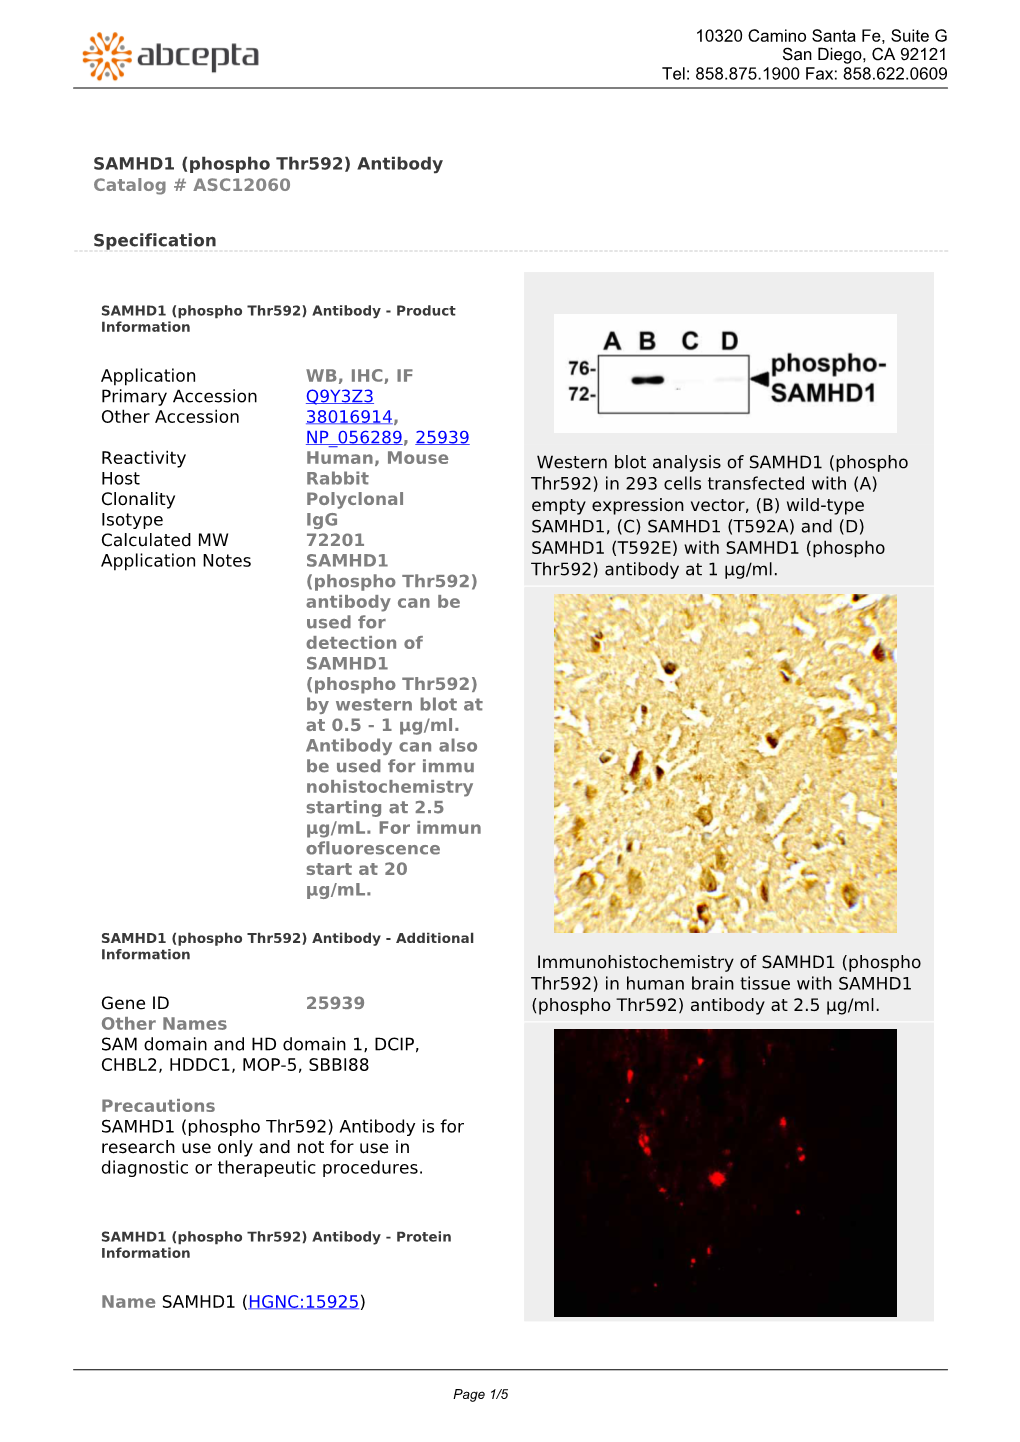 SAMHD1 (Phospho Thr592) Antibody Catalog # ASC12060